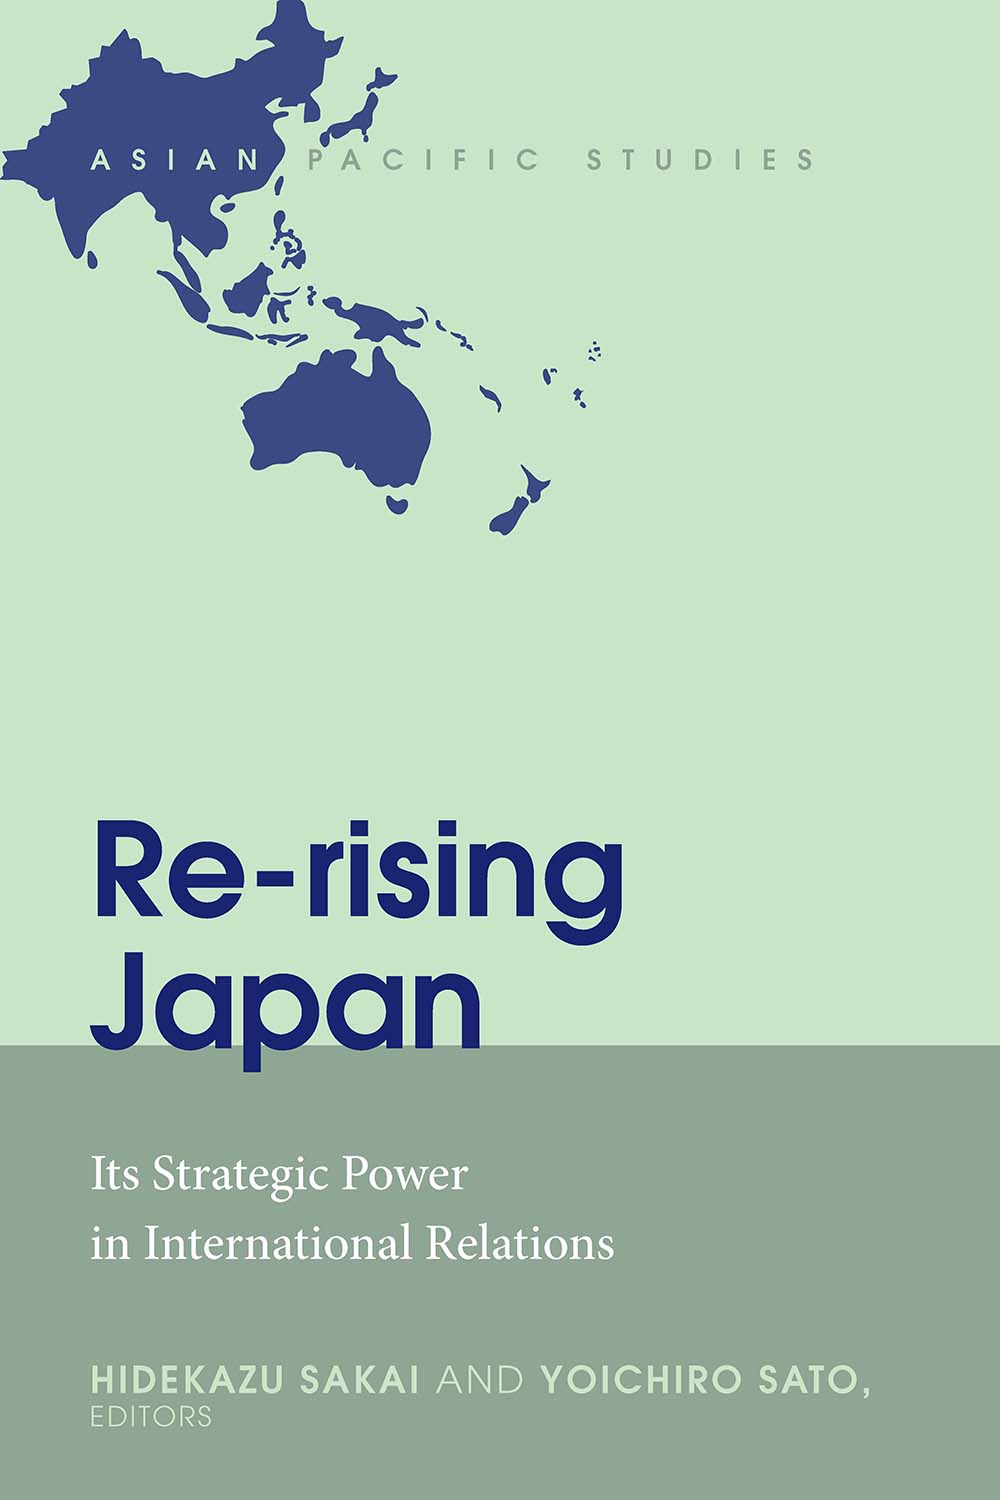 Re-rising Japan: Its Strategic Power in International Relations